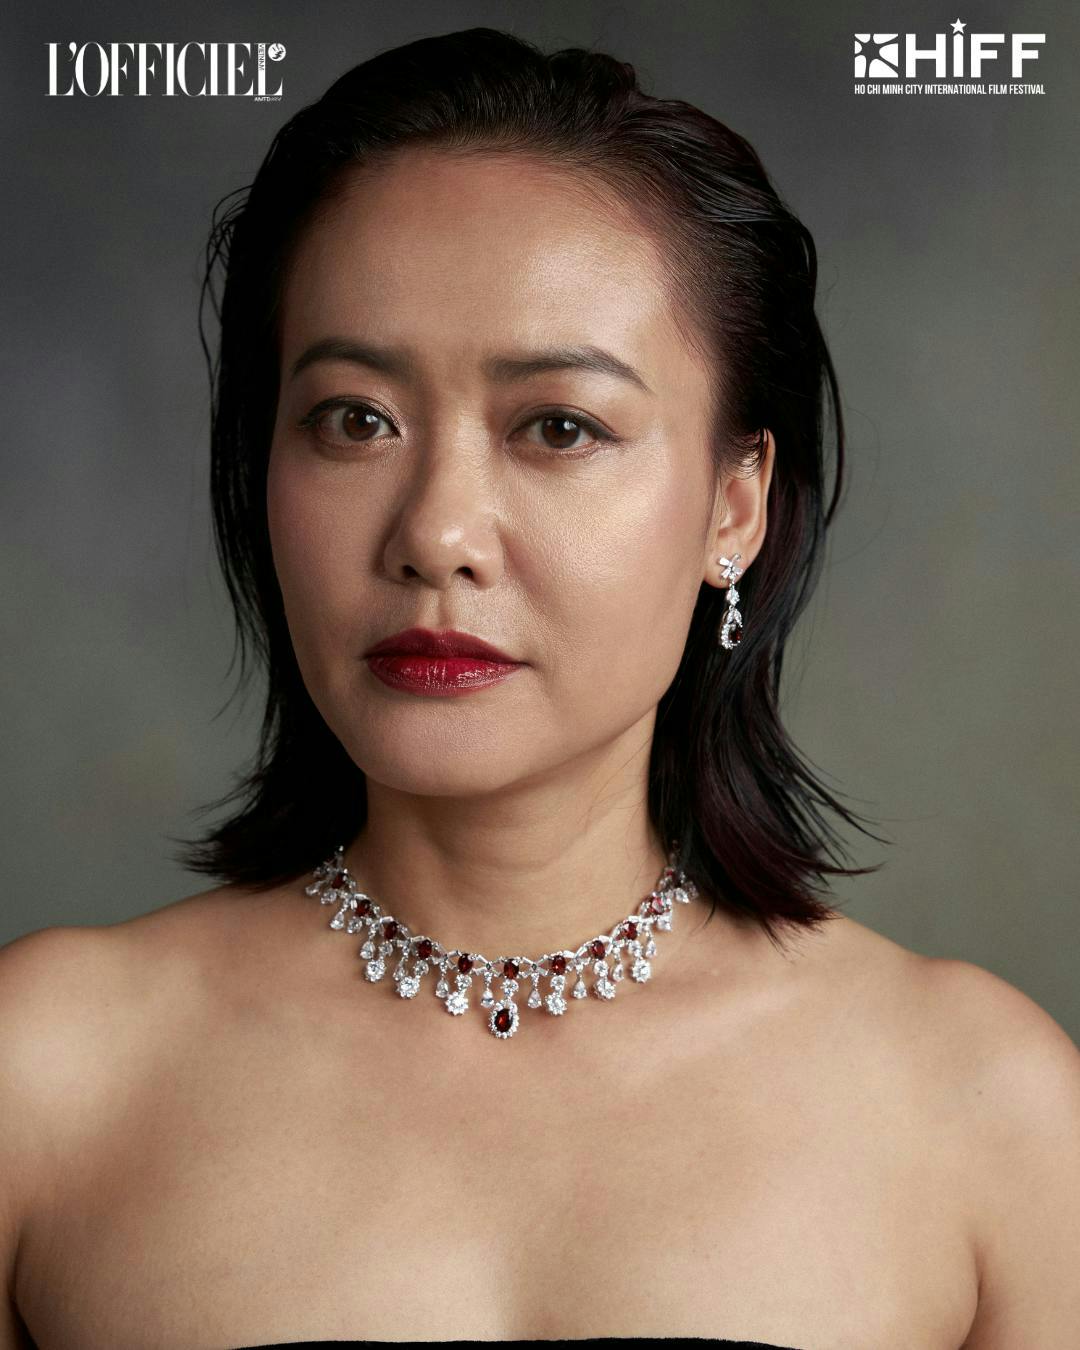 accessories head person face cosmetics lipstick jewelry necklace photography portrait